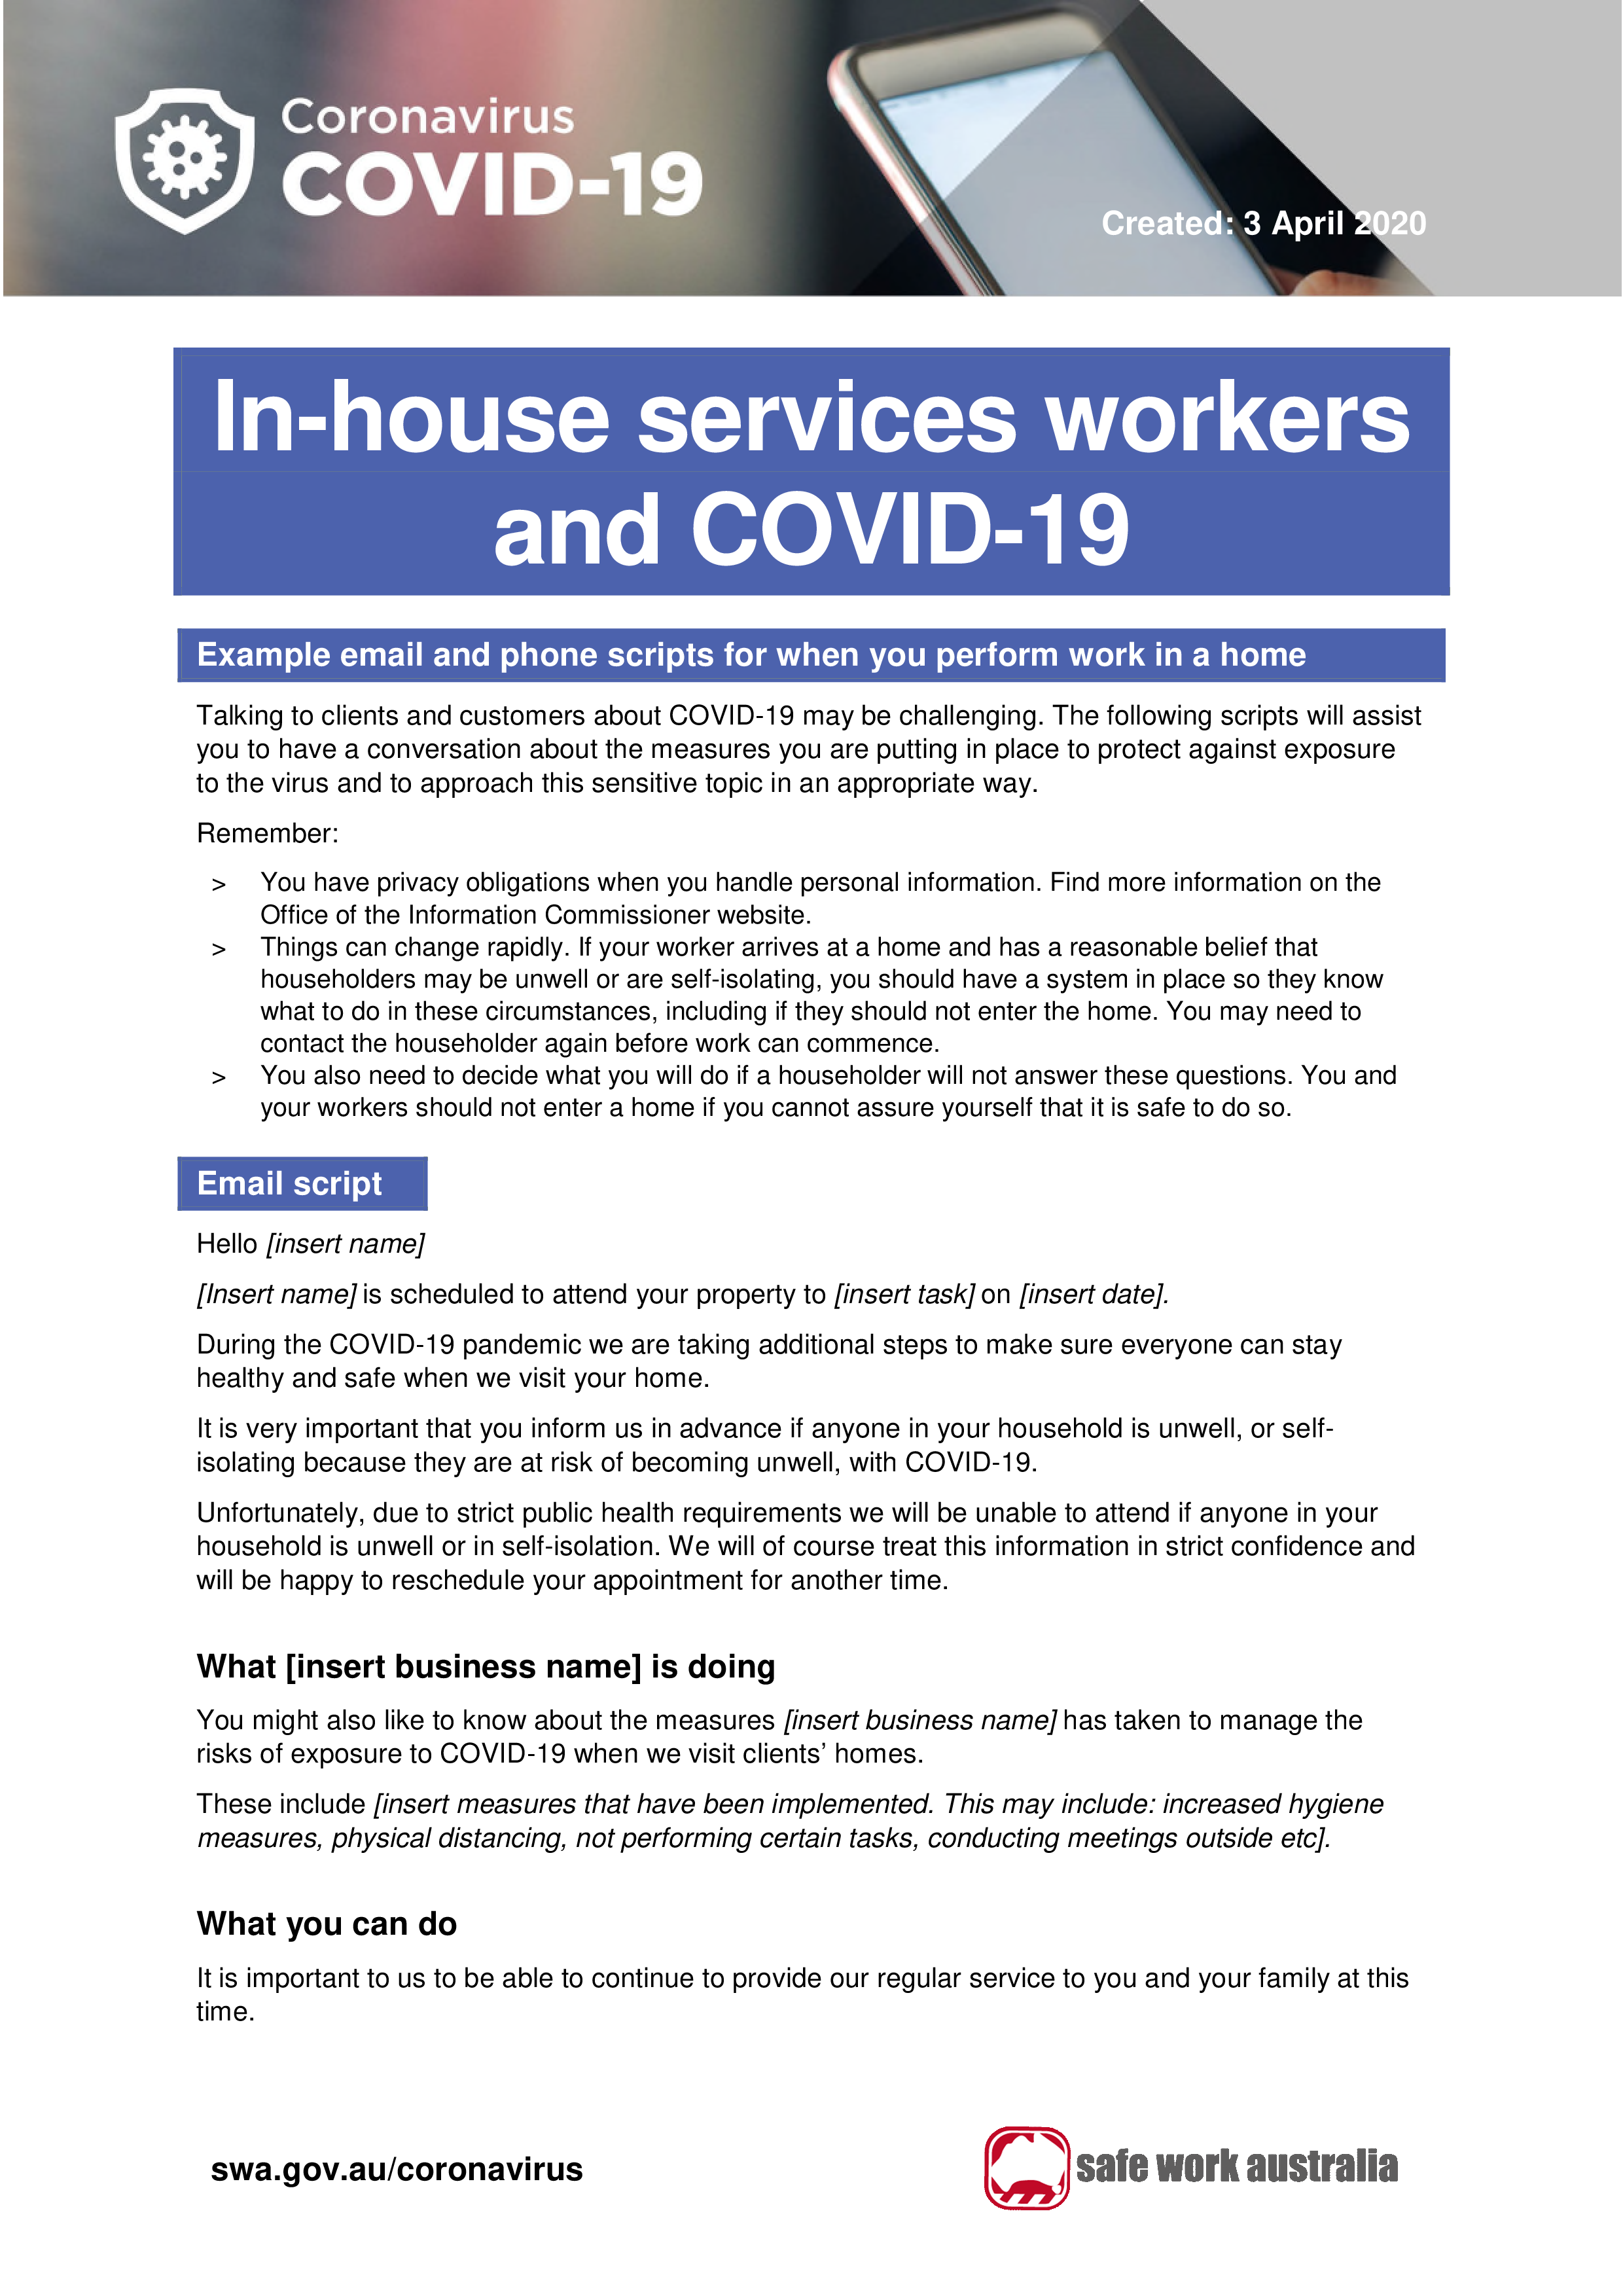 In-house Services COVID 19 E-mail Script main image